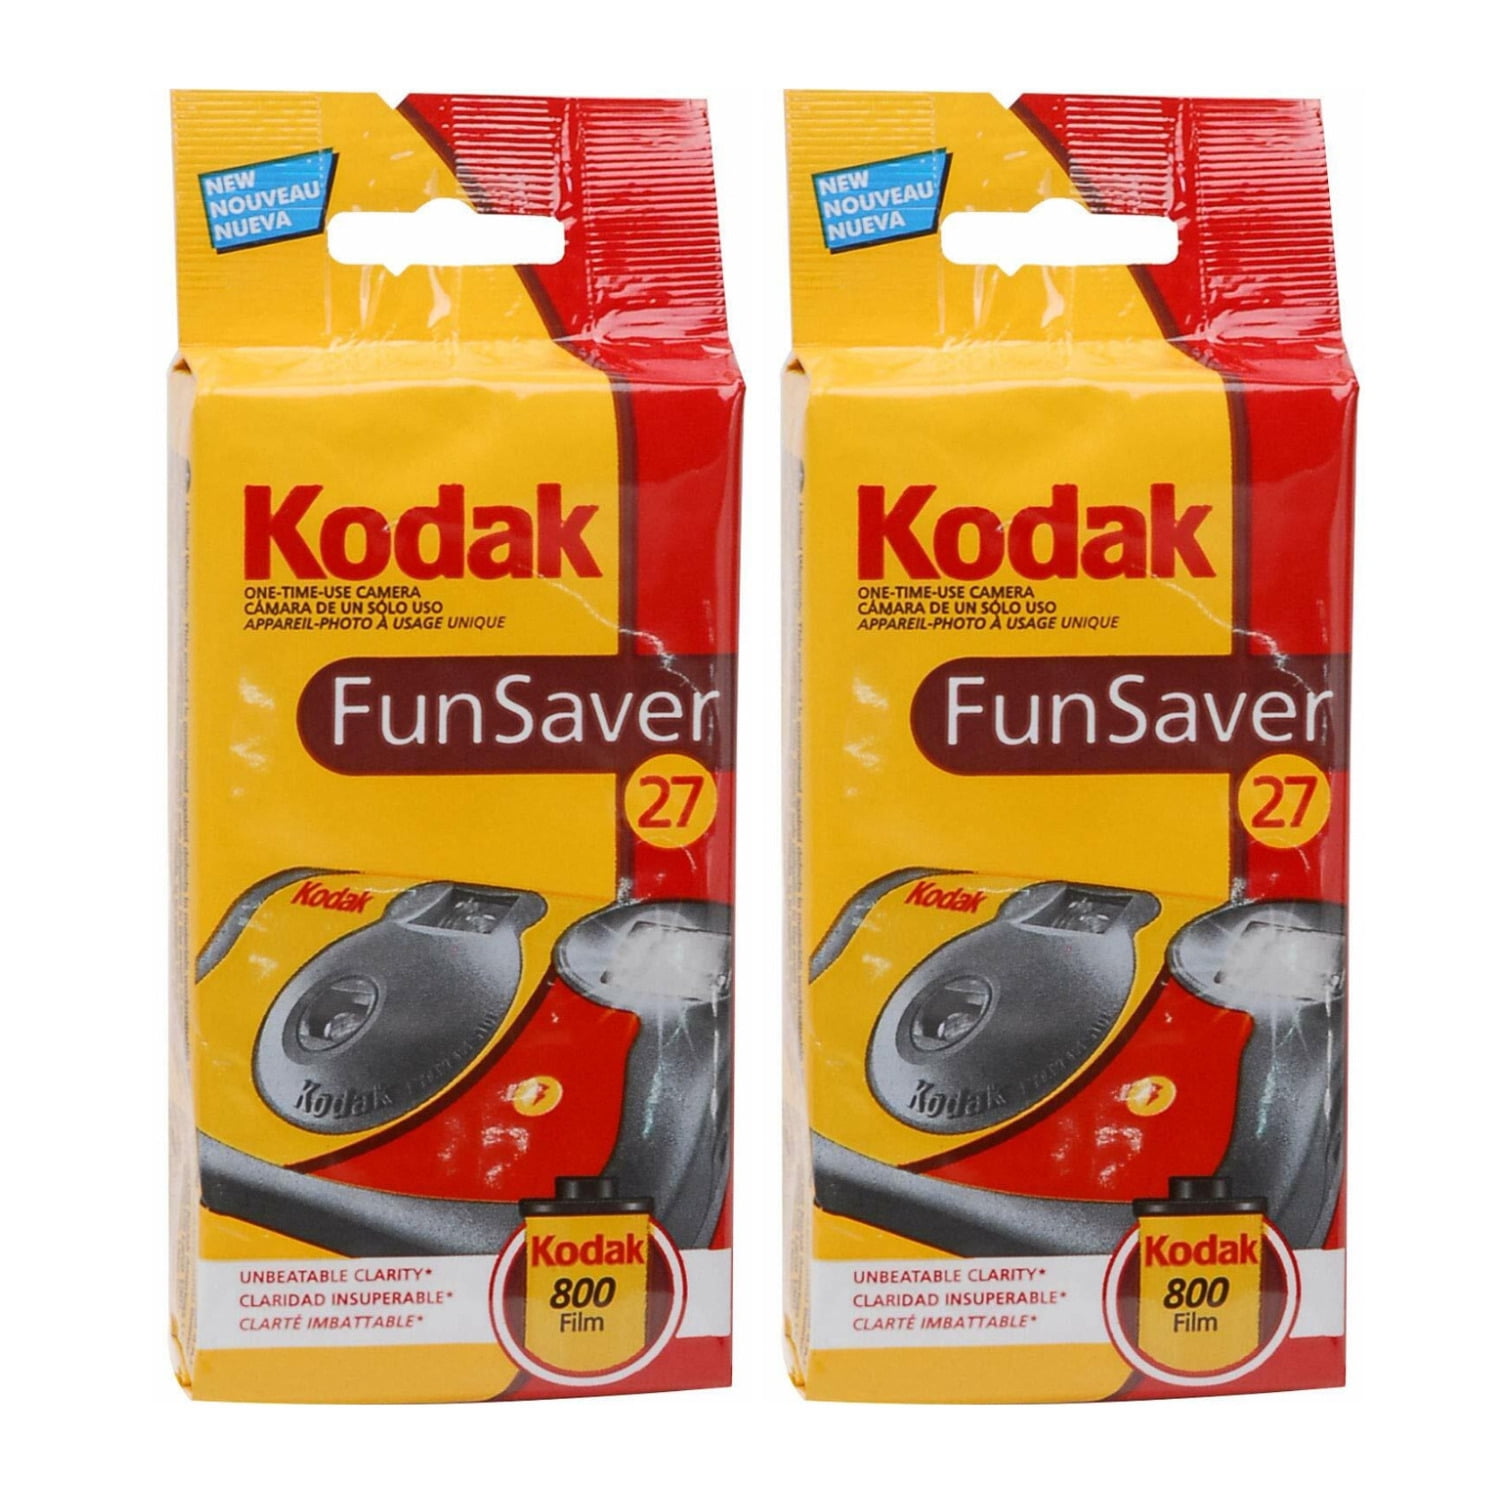 Kodak fun saver single use disposable camera review 